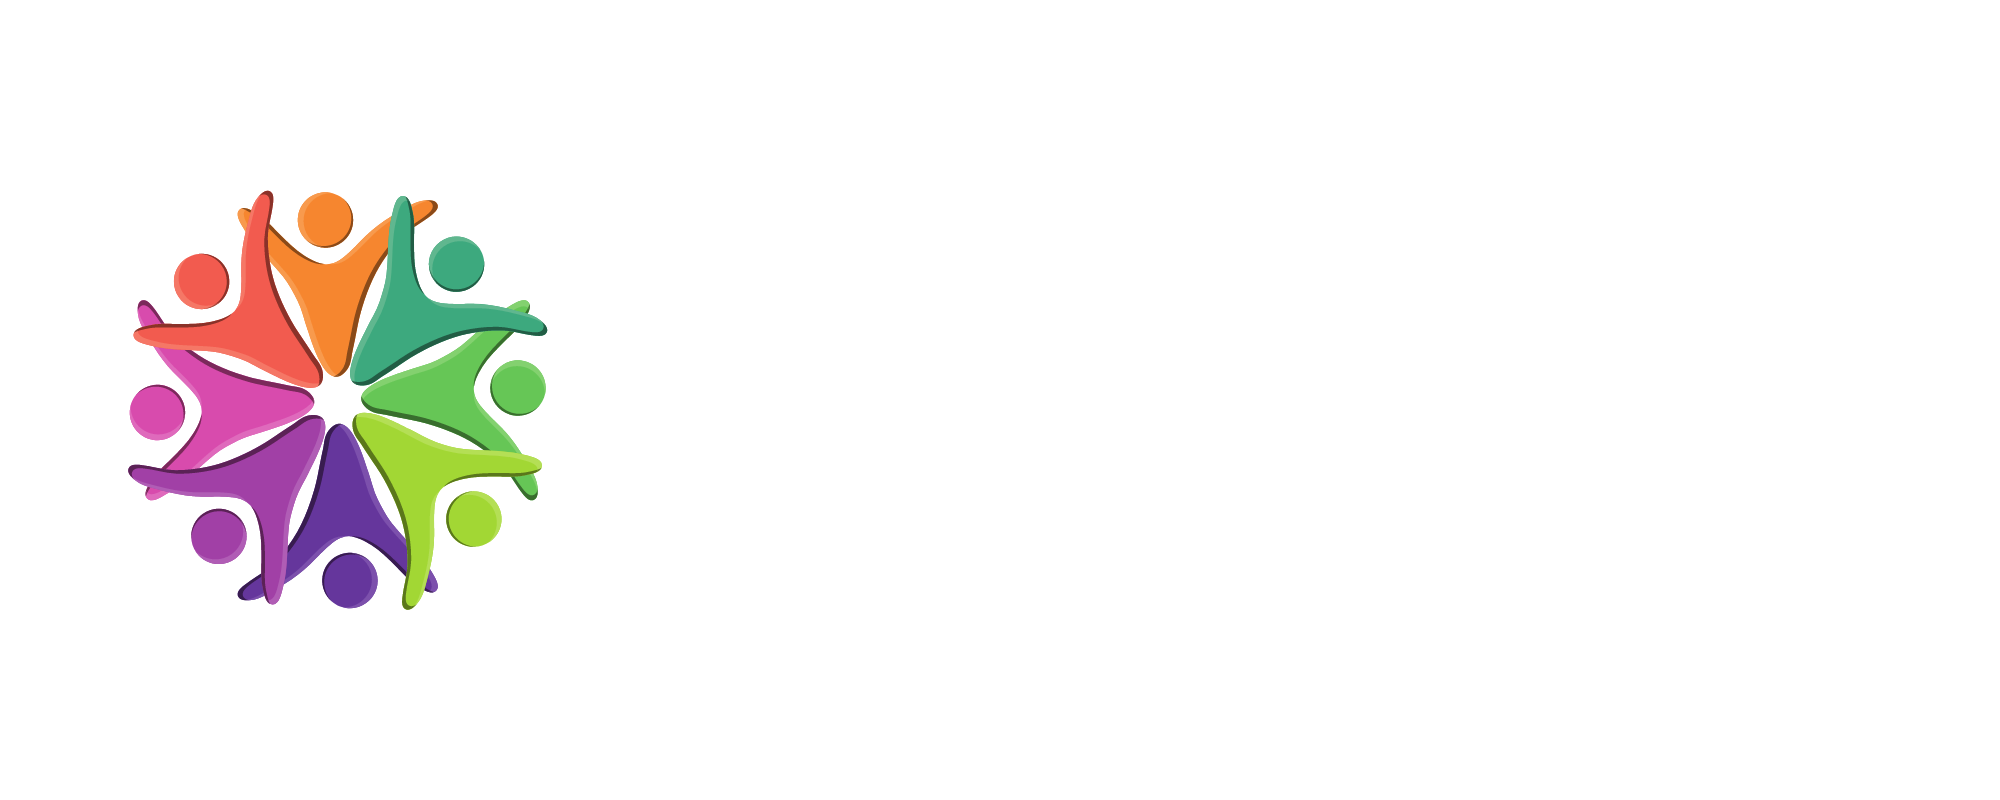 Ankara Etkinlik Rehberi